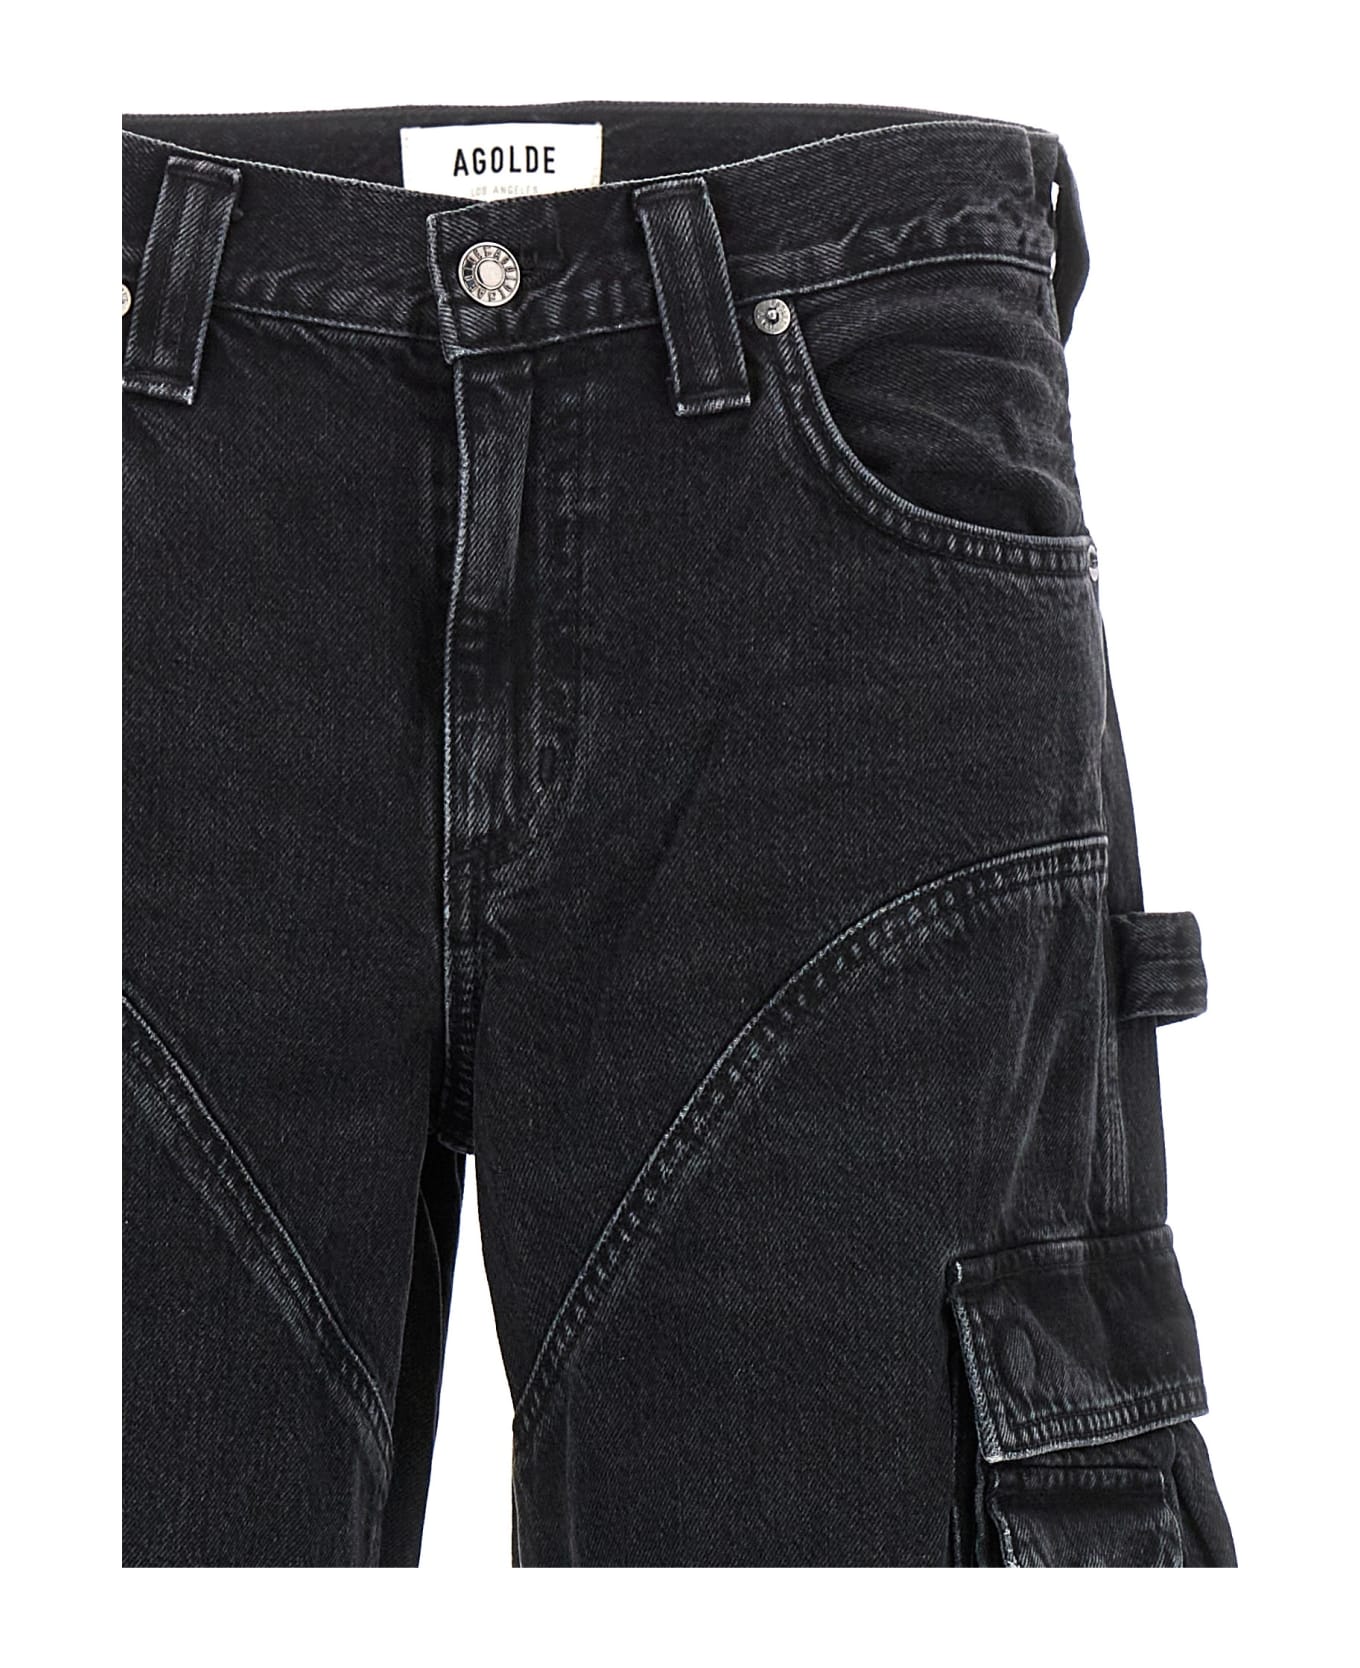 AGOLDE 'nera' Jeans - Black  